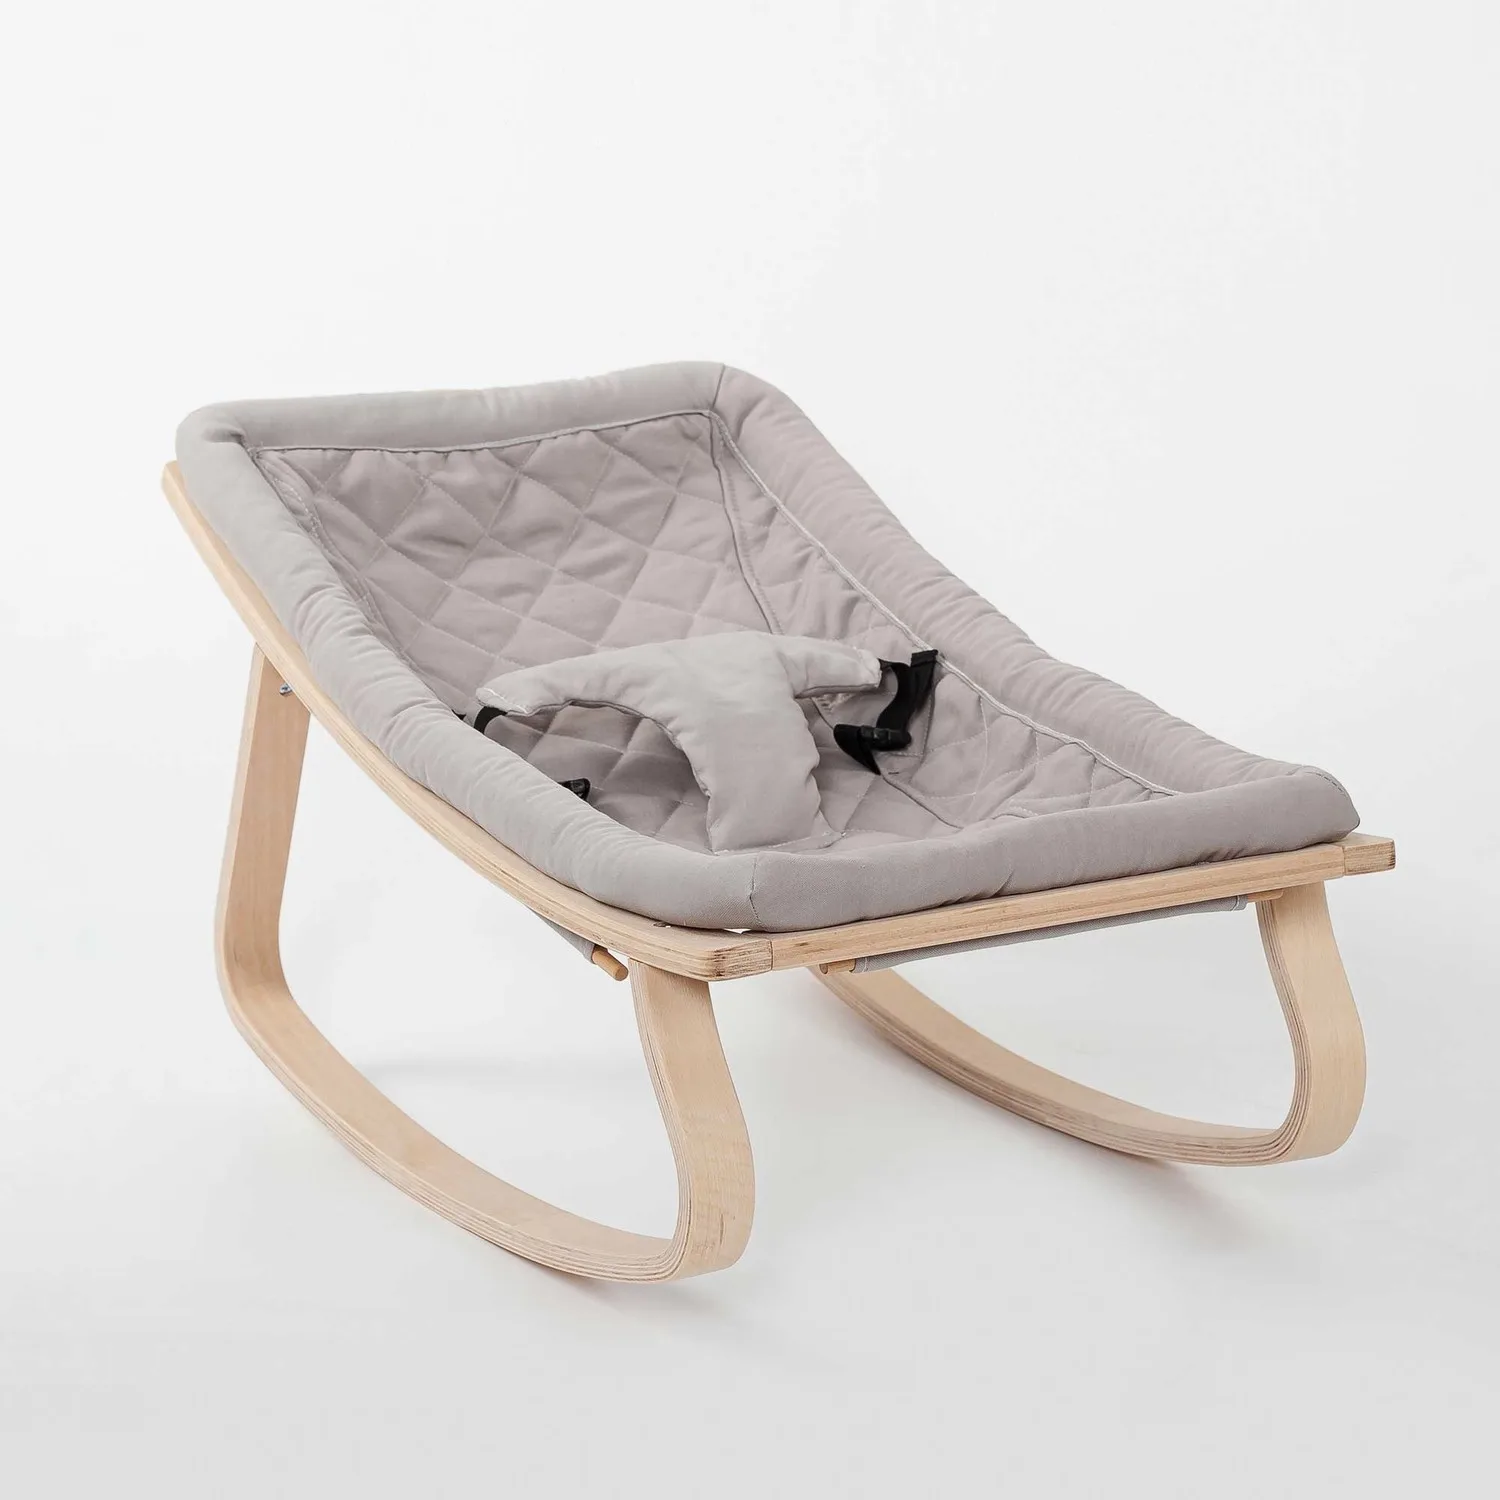 Natural Wood Main Lap Rocking Baby Crib Bed Swing Bassinet Cradle Furniture New Born Kids Room Hammock Made in Turkey